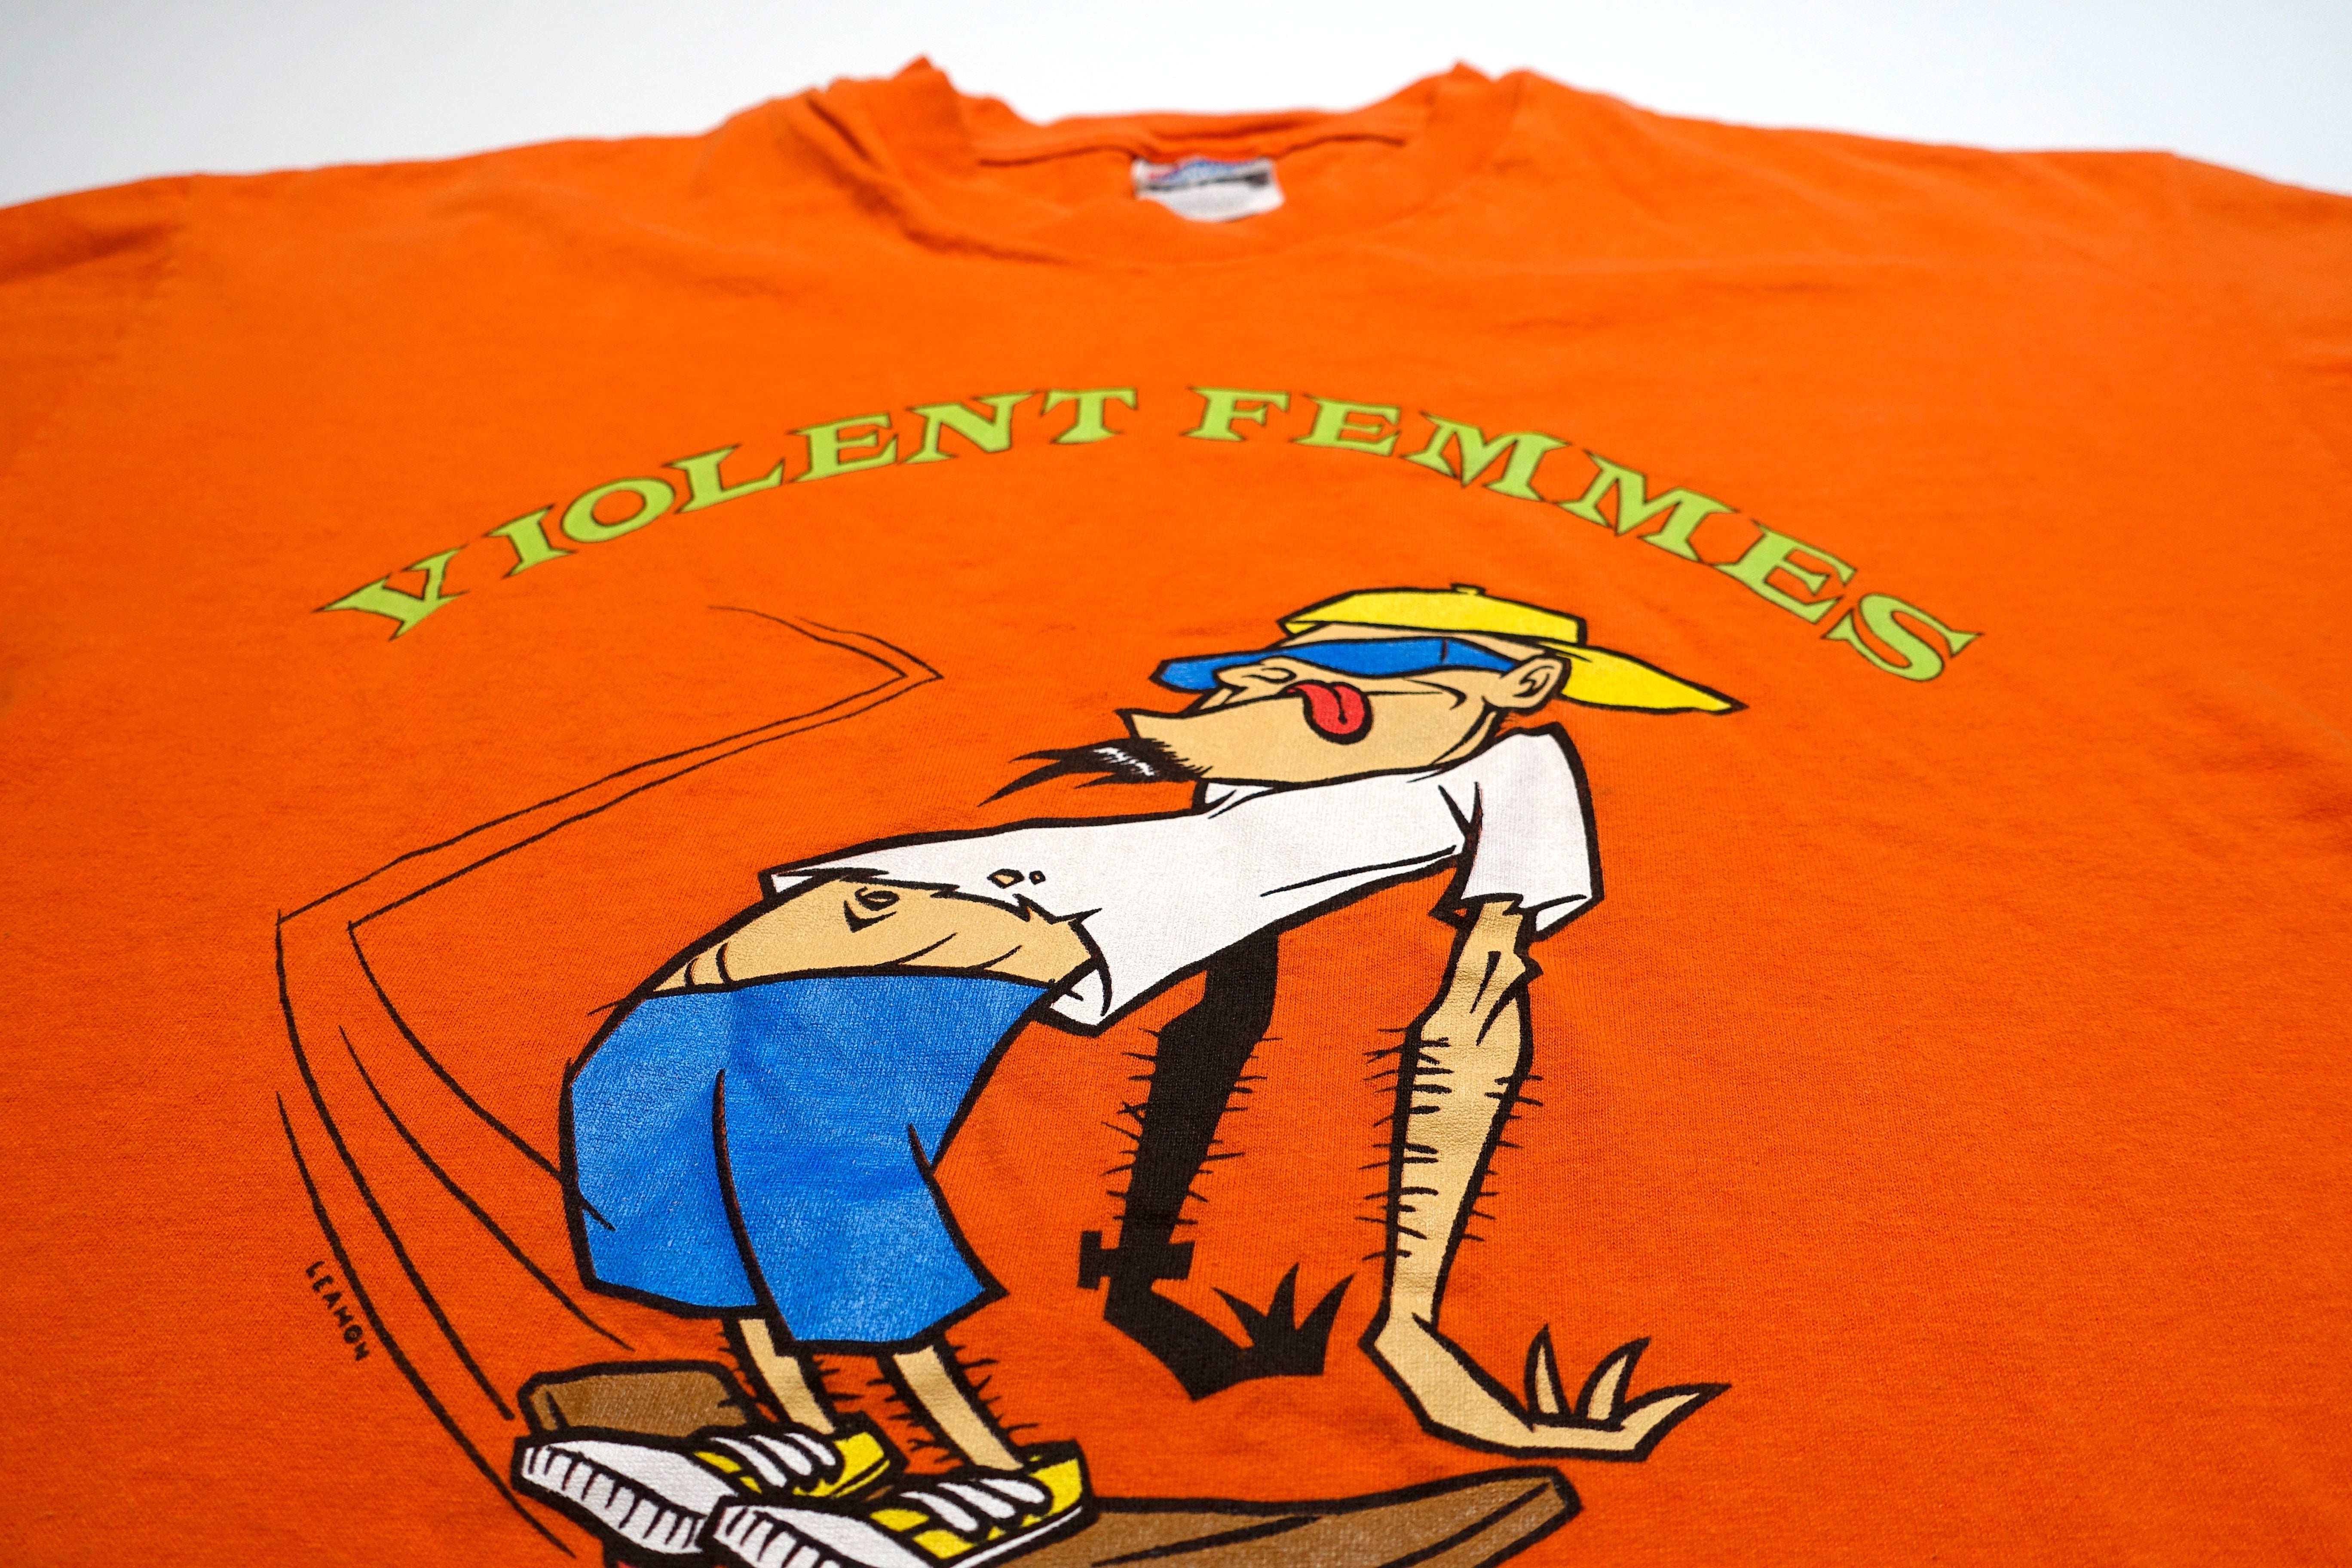 Violent Femmes - ...I Strut My Stuff 1997 Tour Shirt Size XL